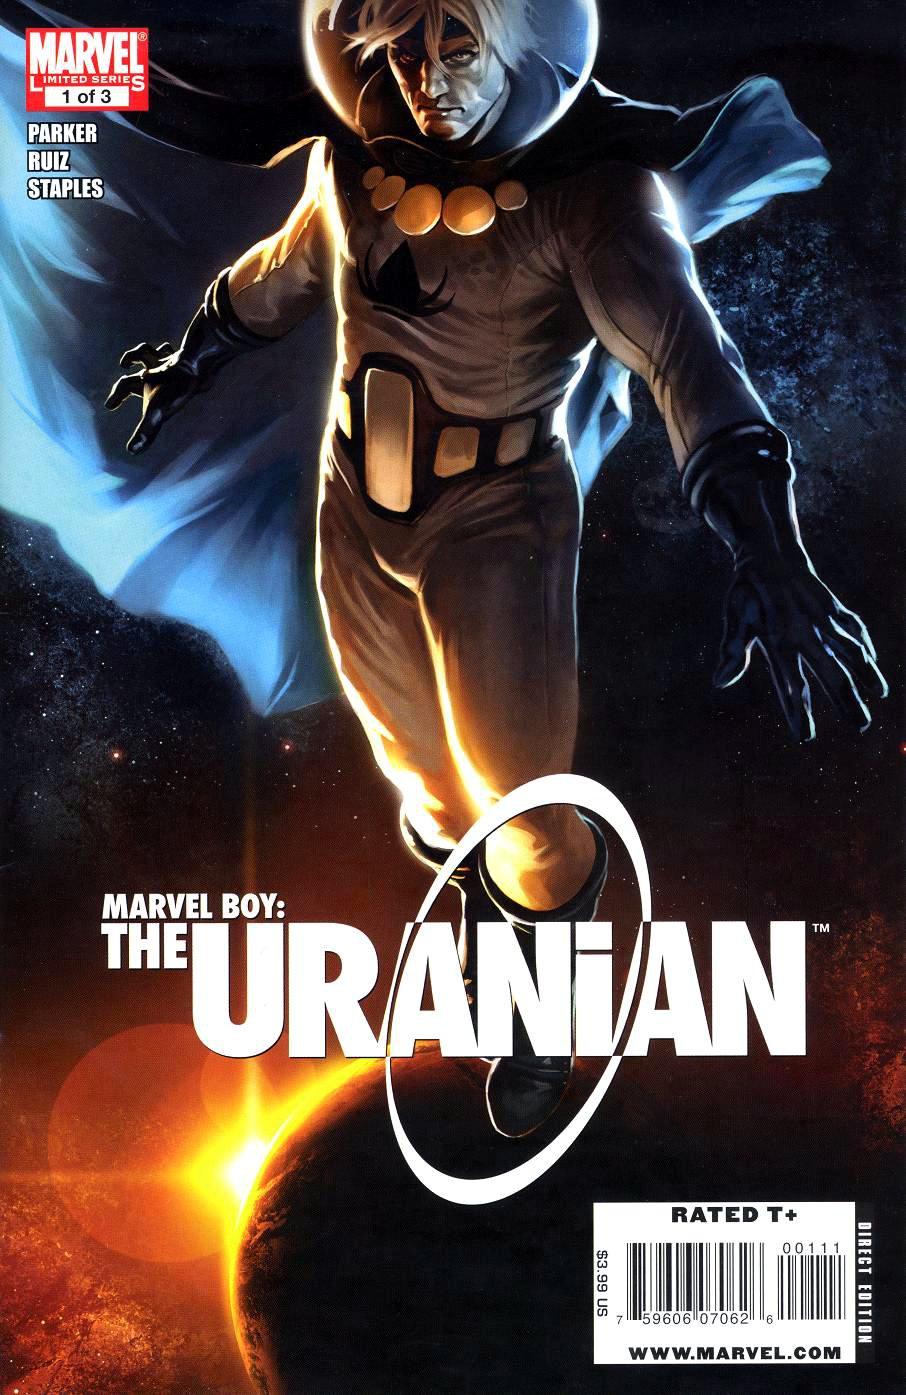 Marvel Boy: The Uranian Vol. 1 #1